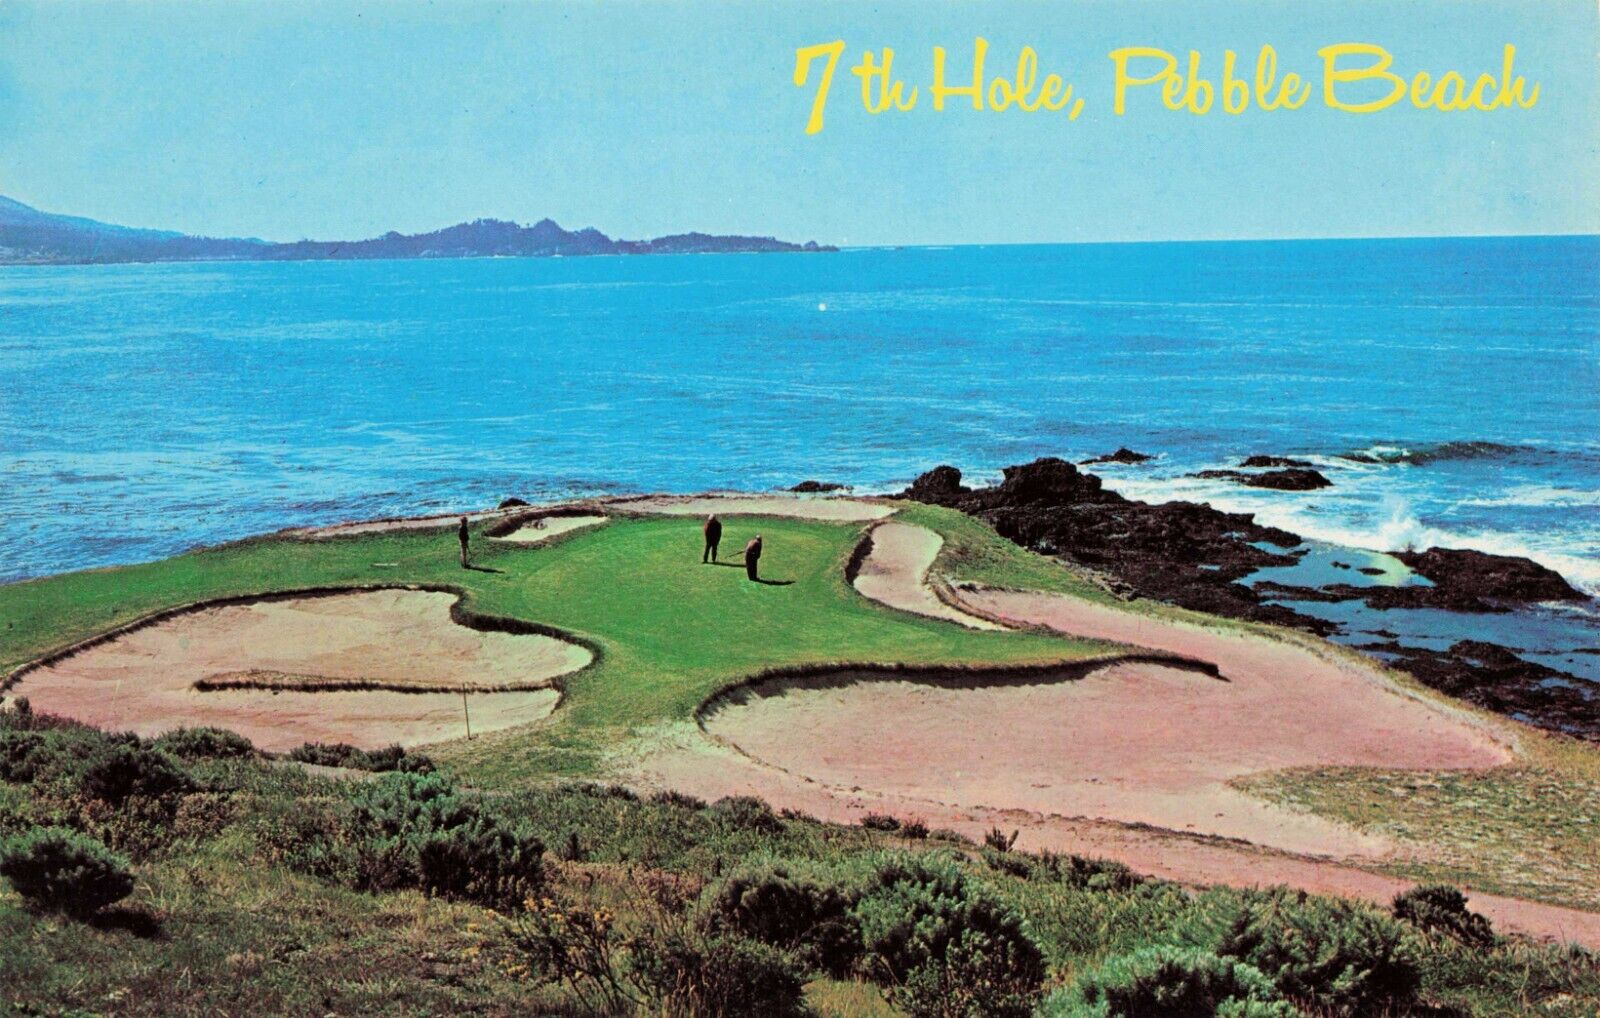 Postcard Pebble Beach Golf Course California The 7th Hole Golfing